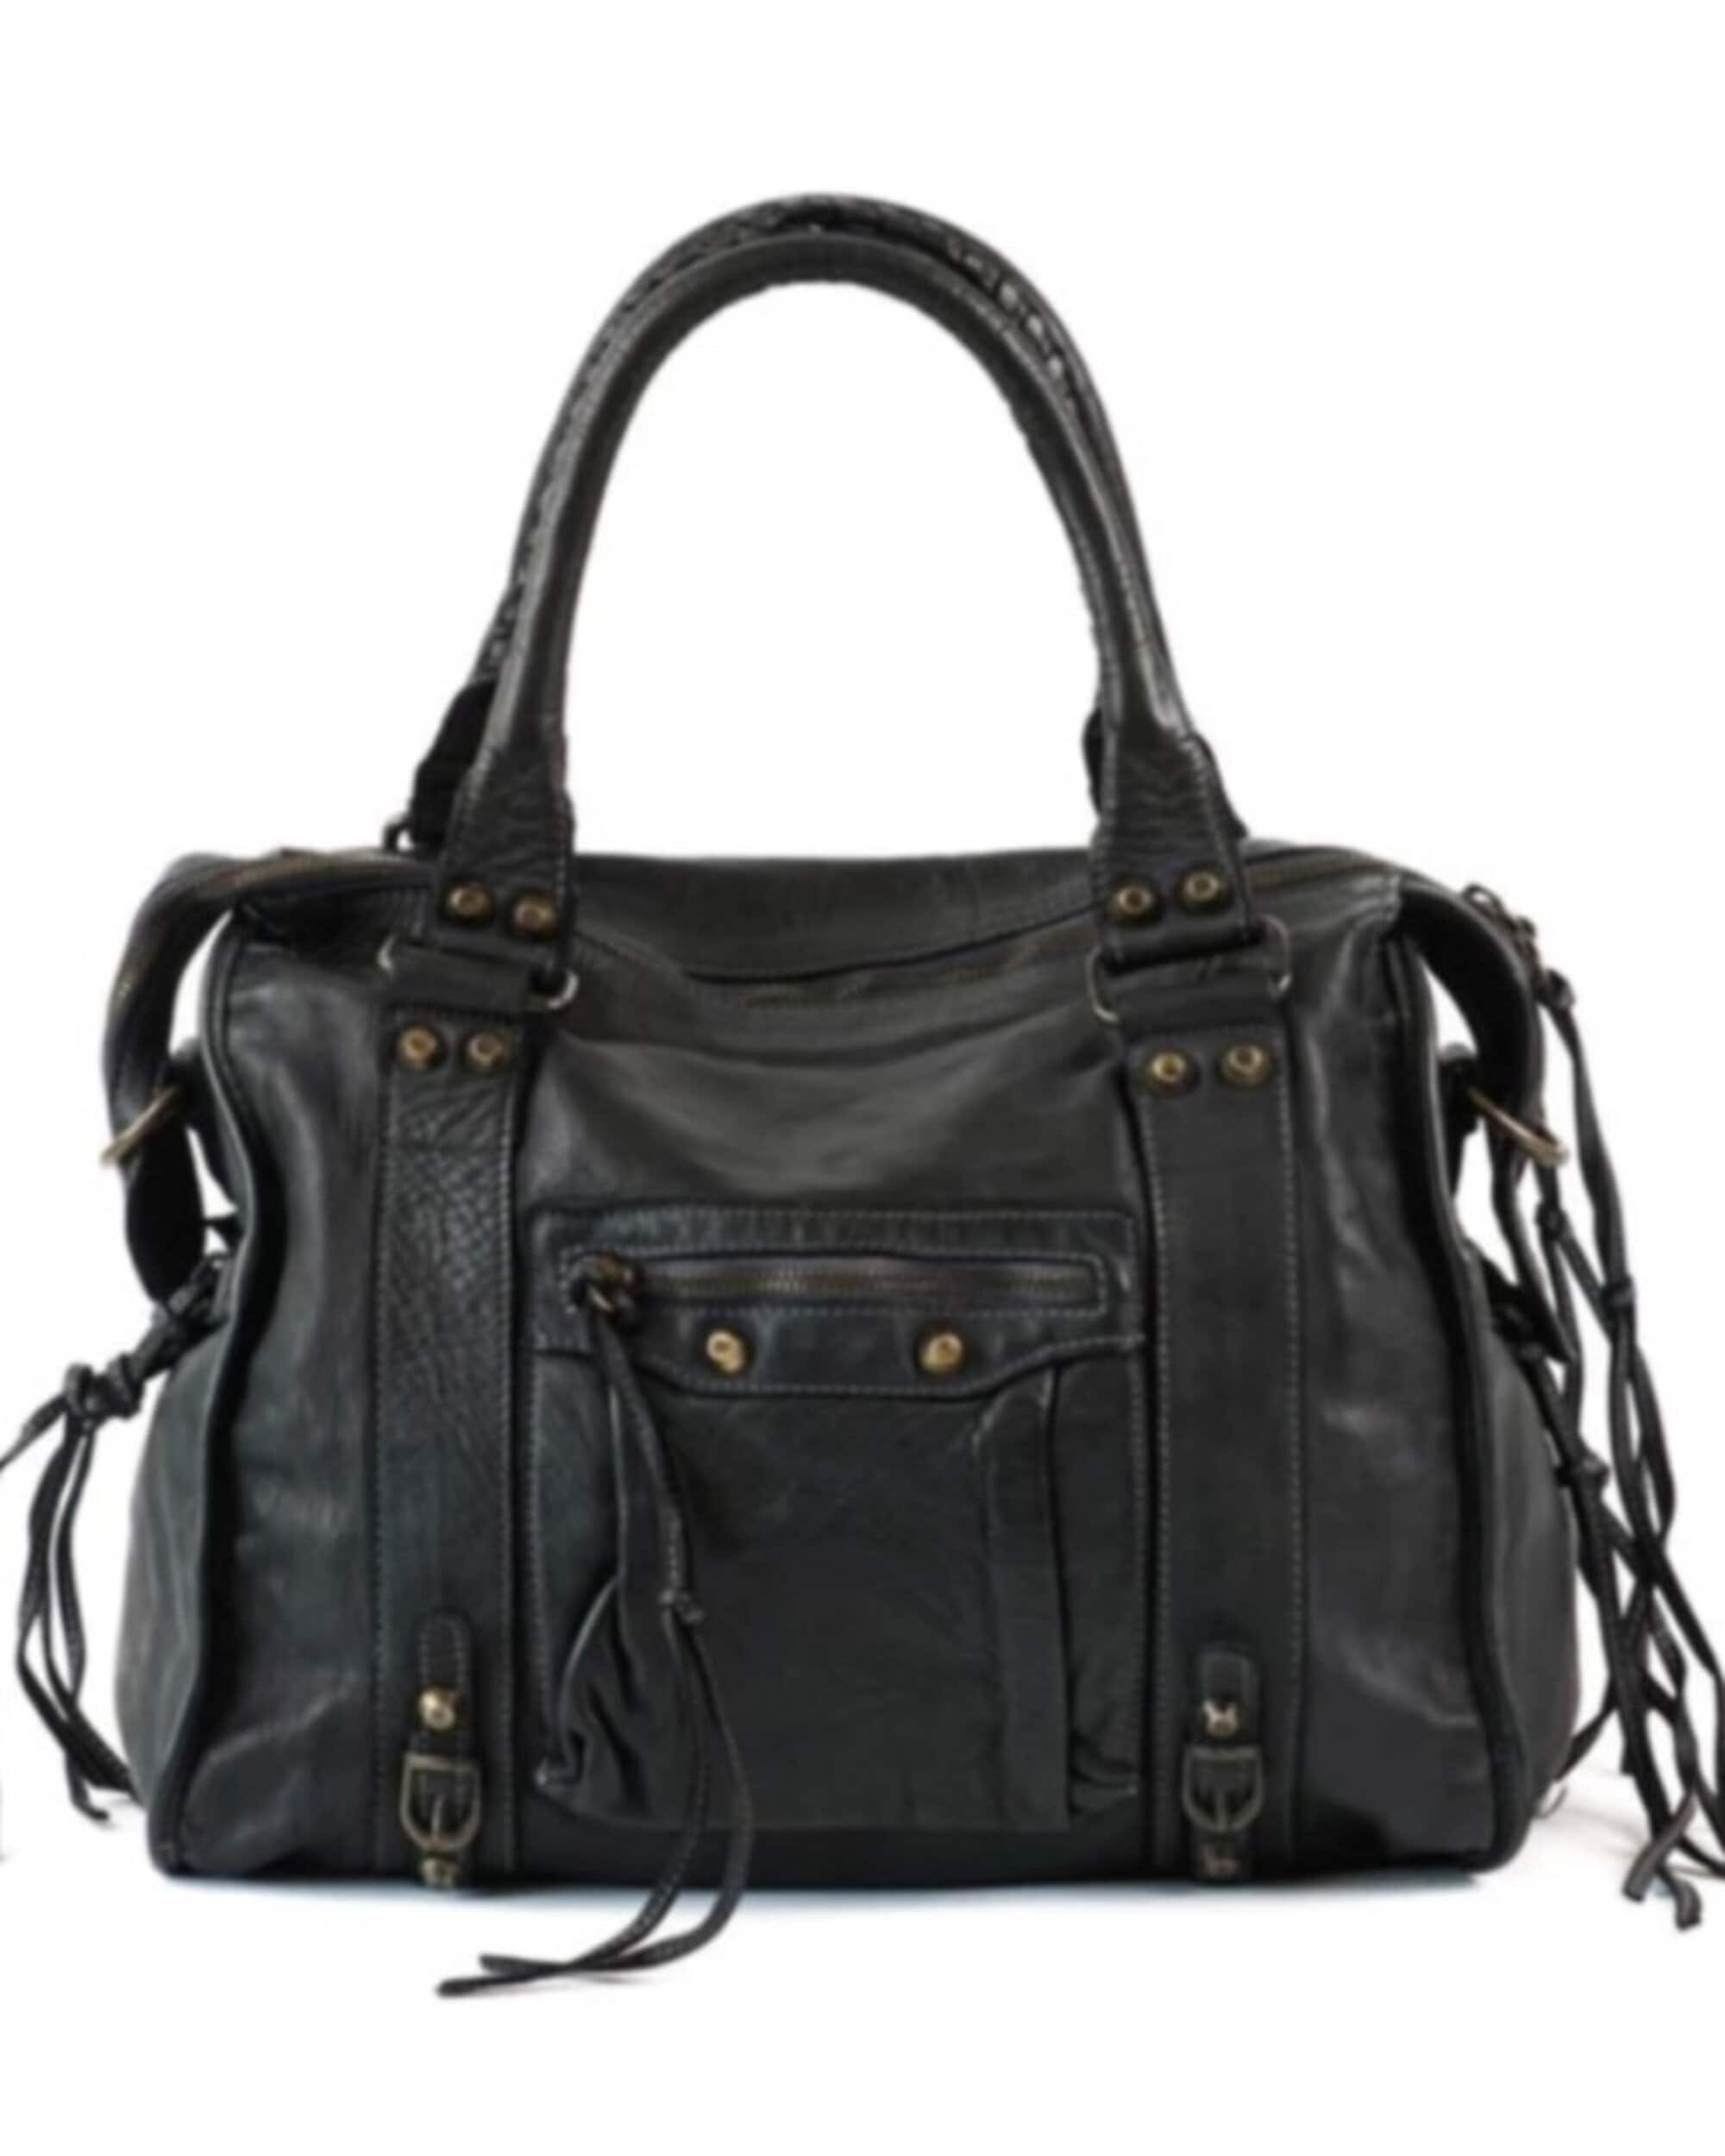 Black Italian Leather Boho Bag / Italian Leather Bag / Black Leather ...